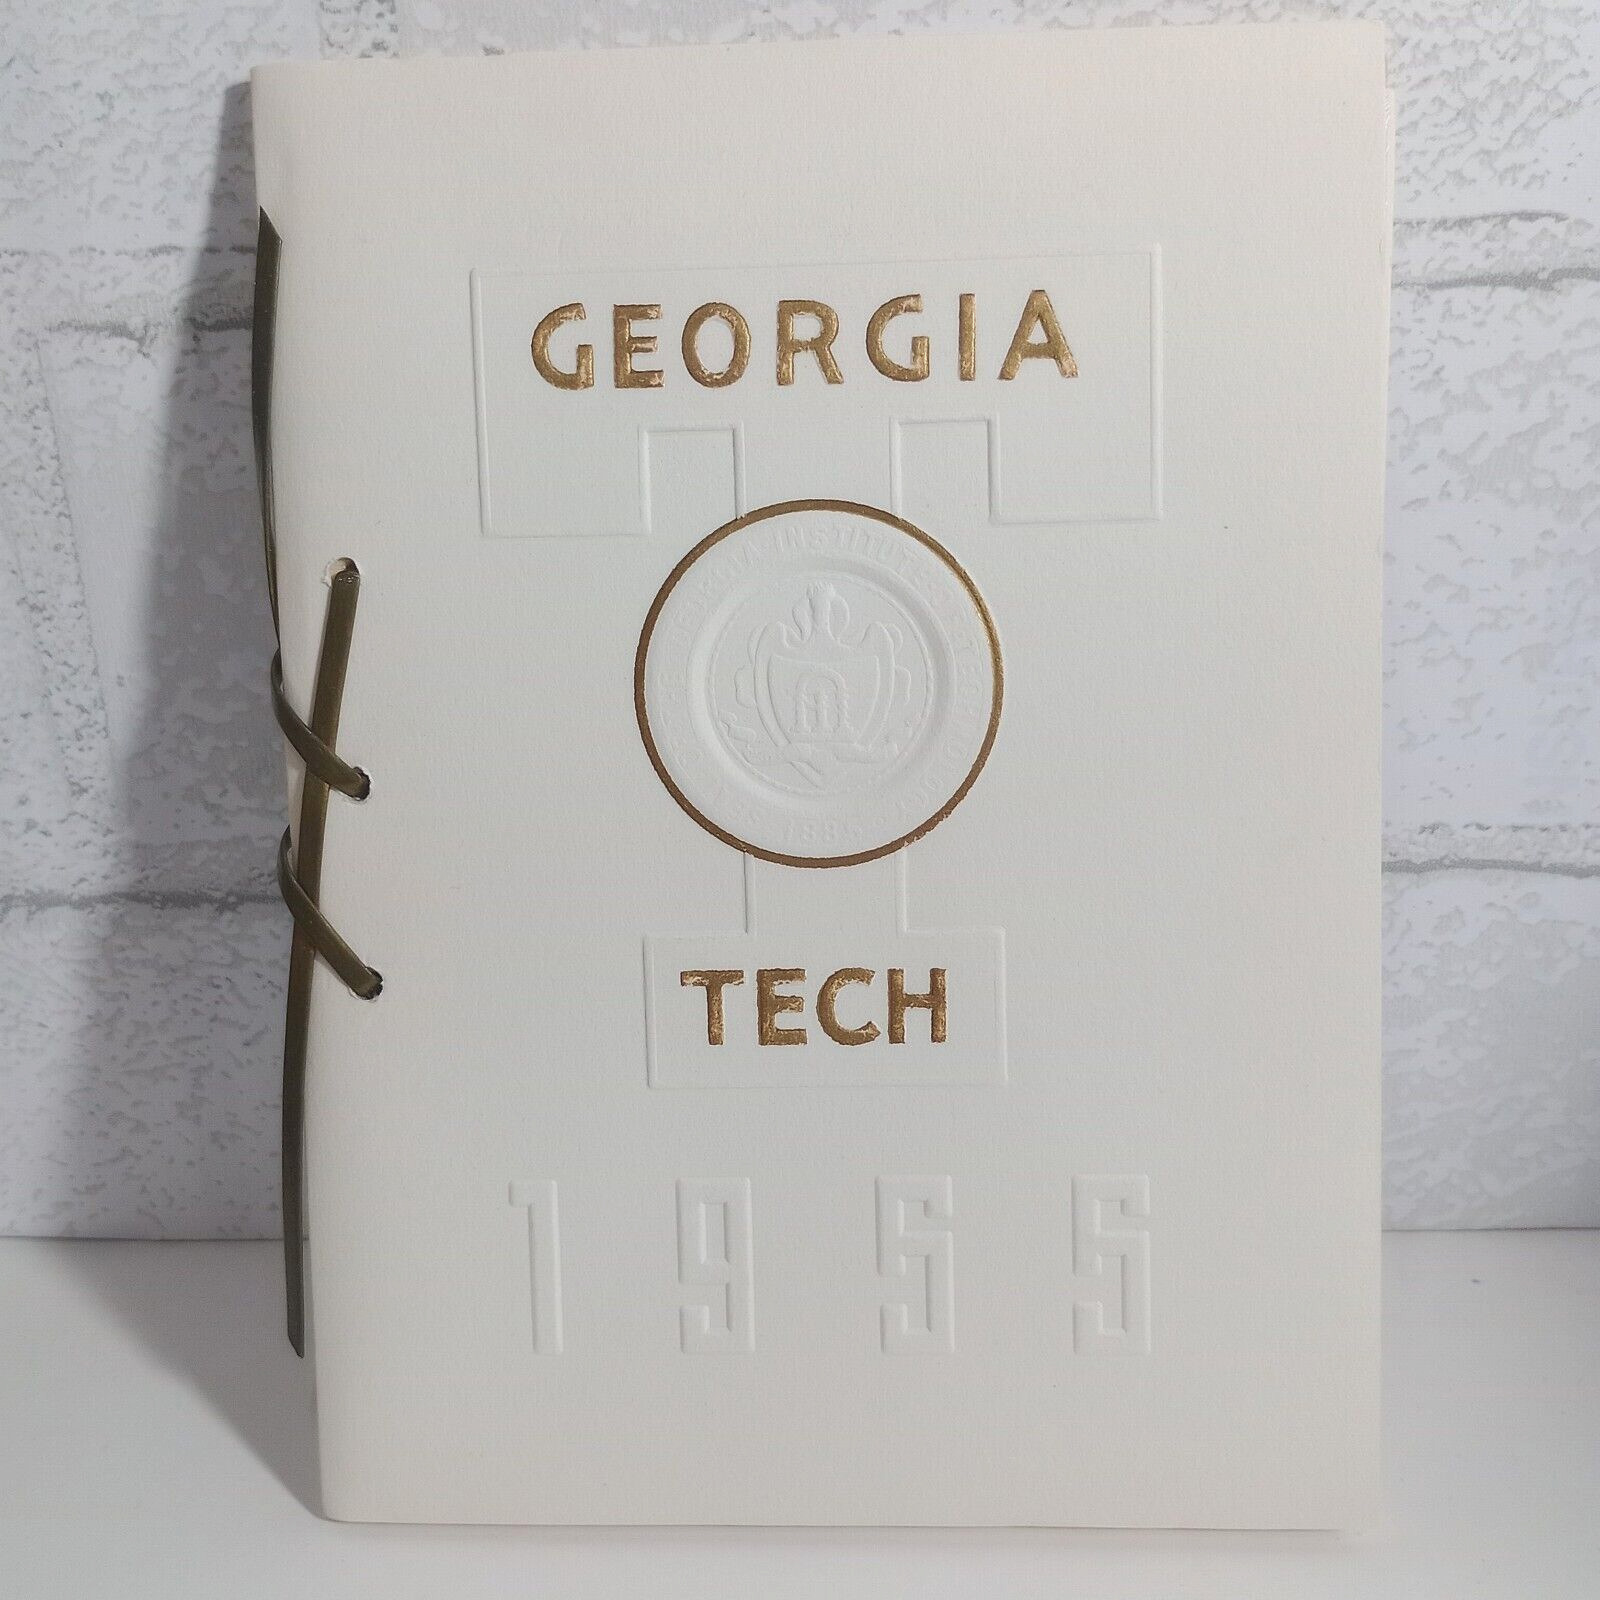 Vintage 1955 Georgia Tech Grad Commencement Program Collectible Memorabilia Rare